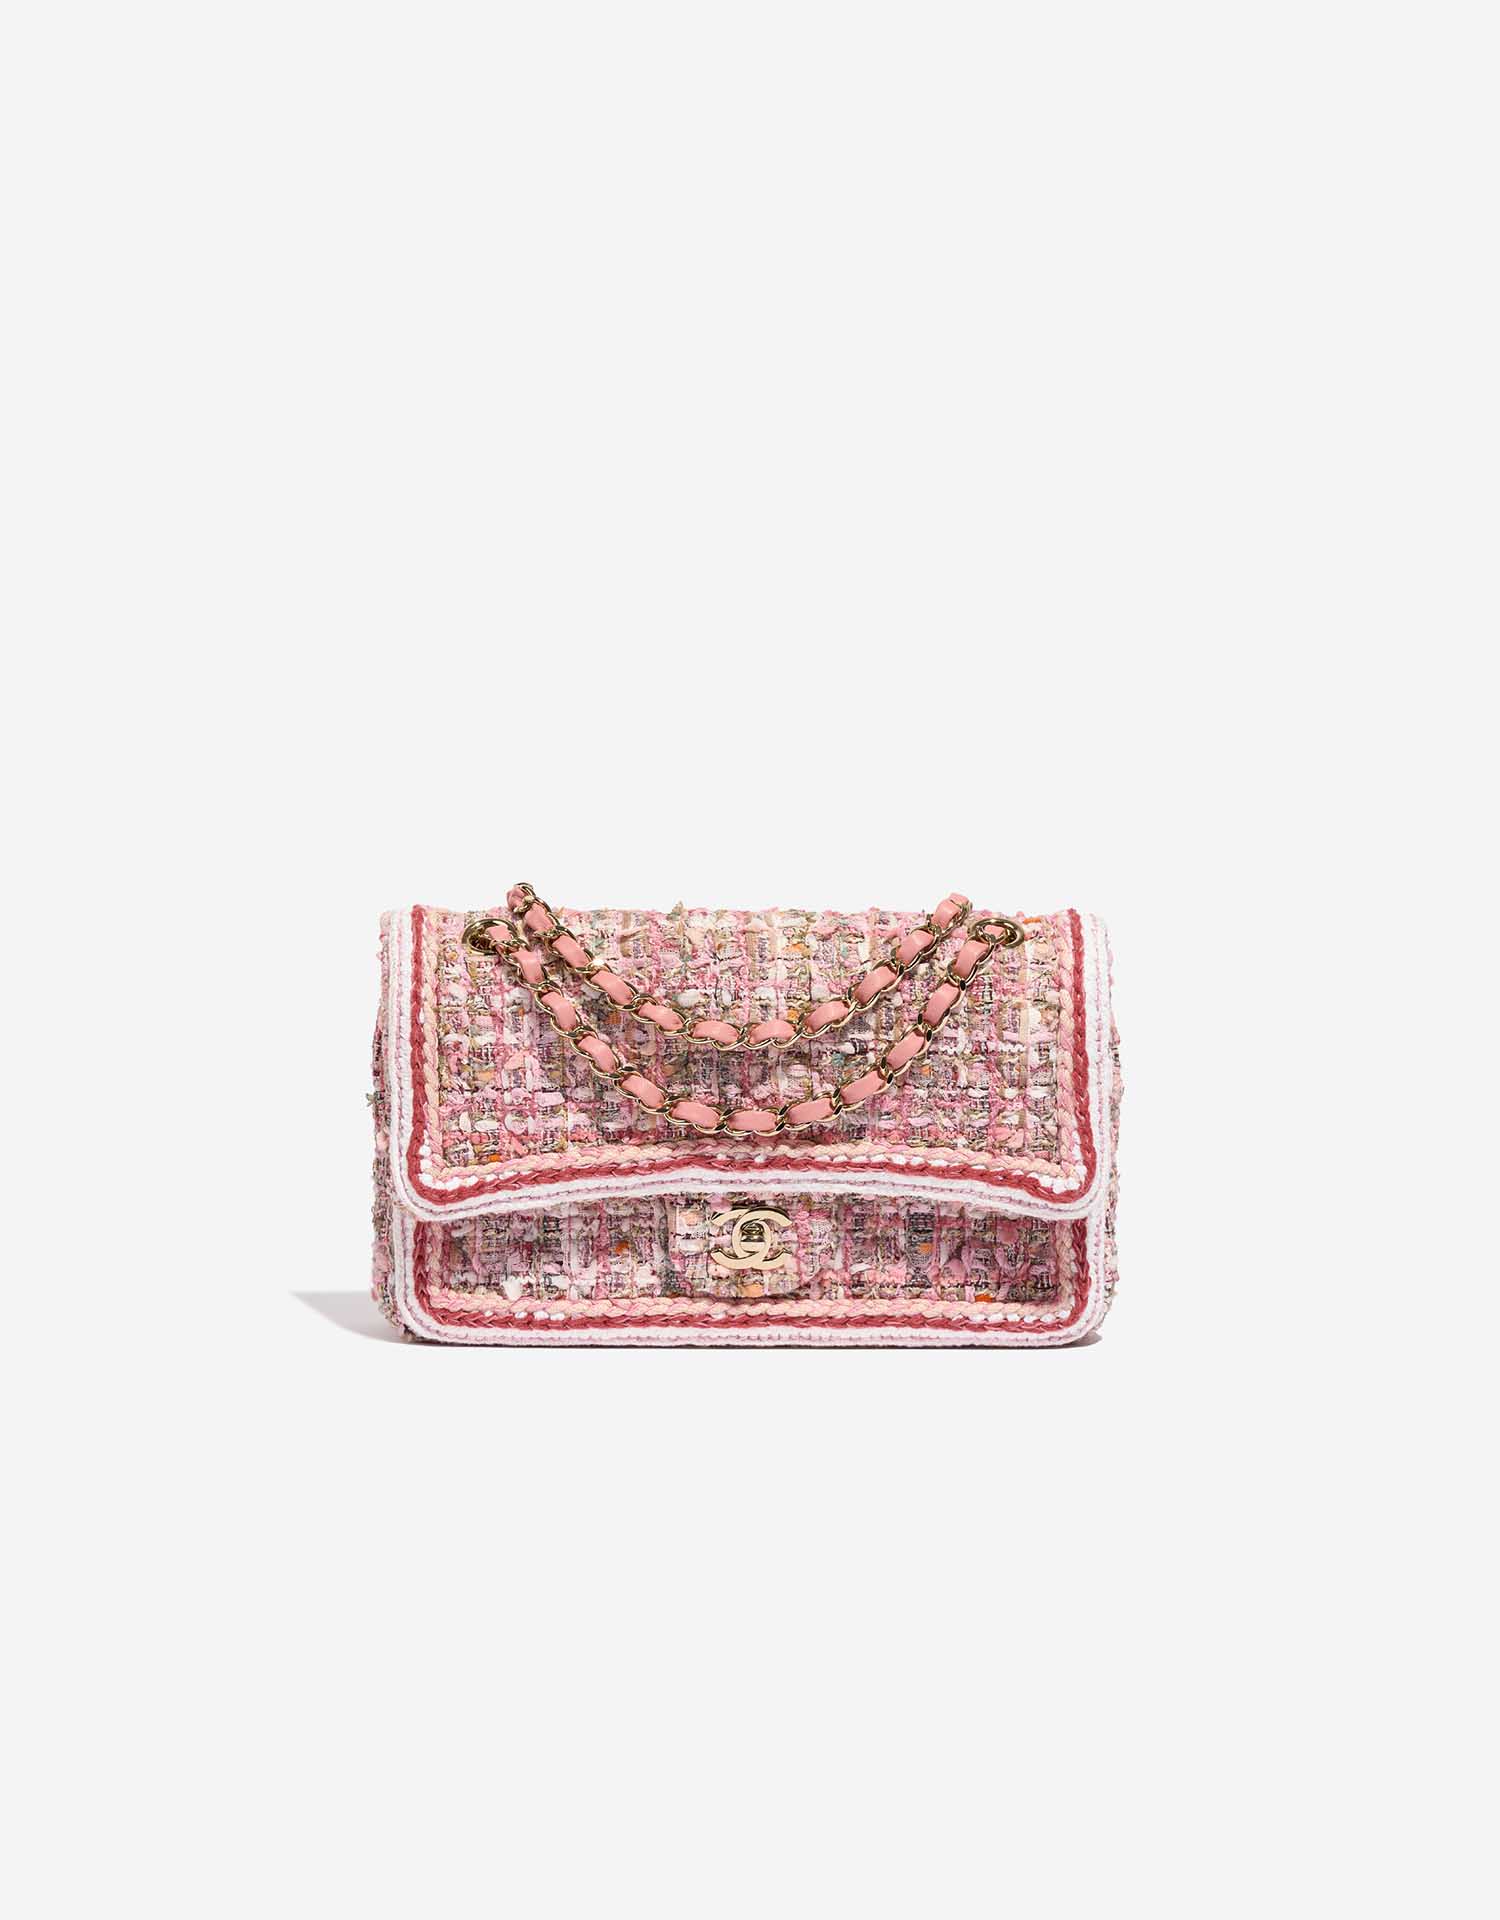 Chanel Timeless Medium Tweed Pink | Saclàb